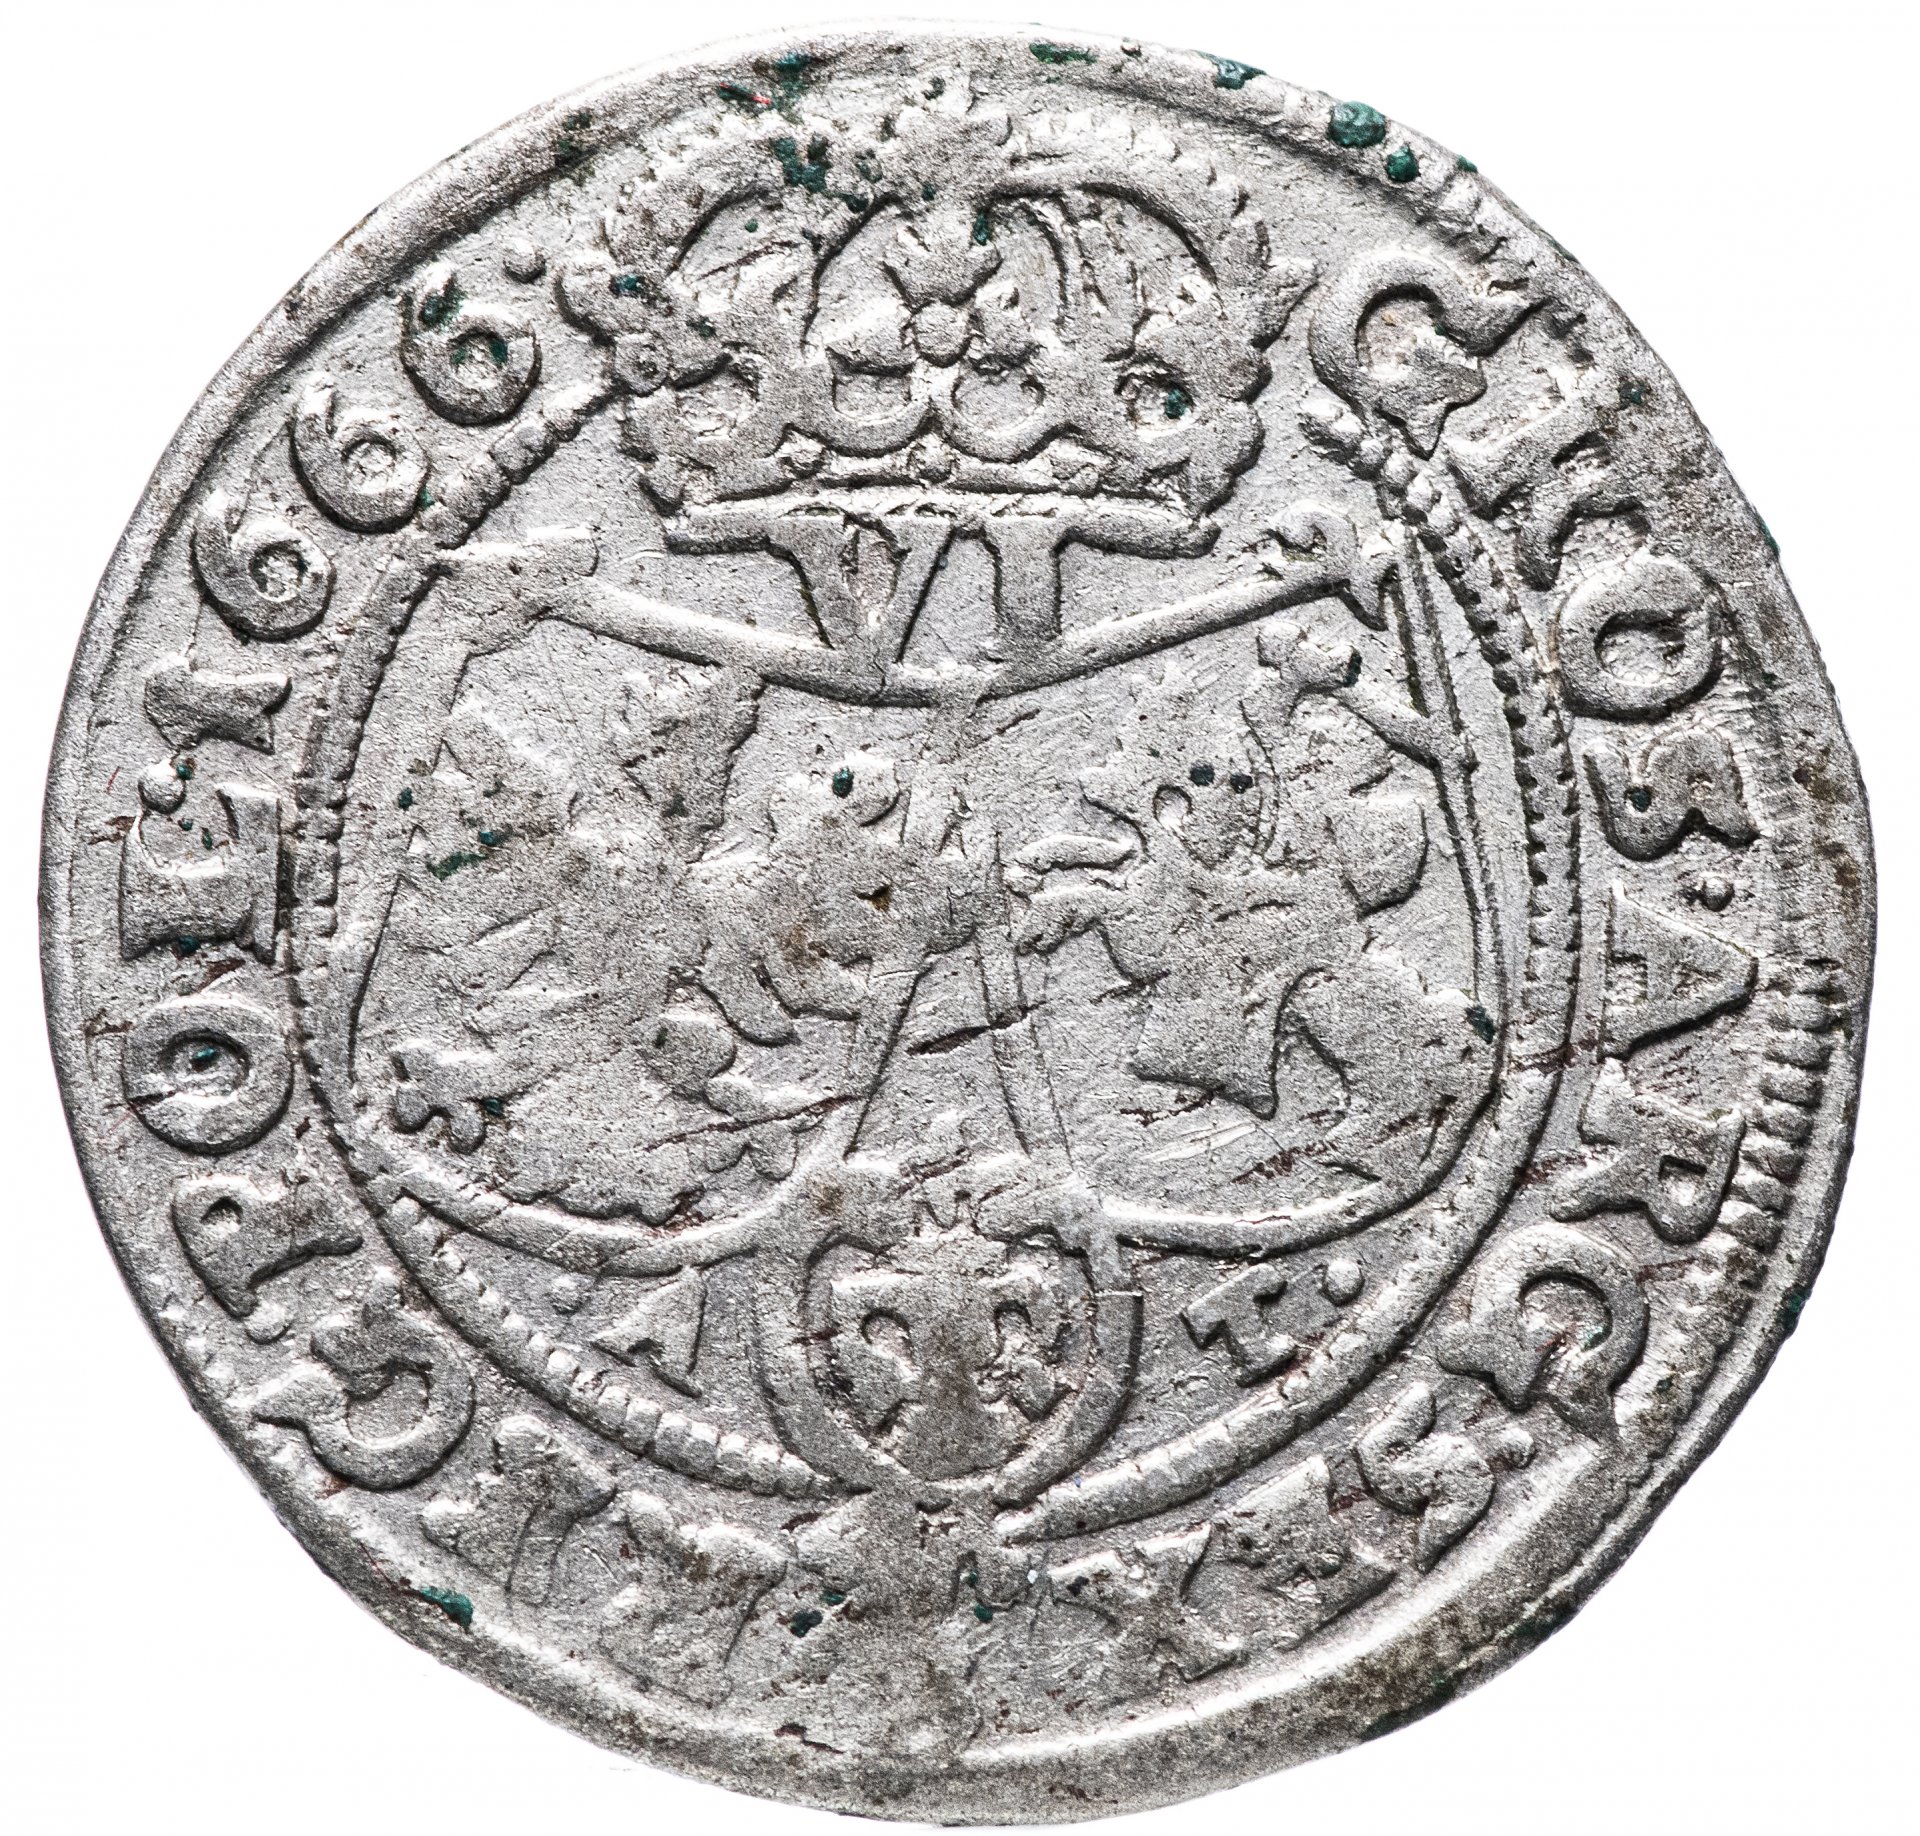 Монета речь посполита. Монета речи Посполитой 1666. Серебряная монета речи Посполитой 1640. Полторак монета речи Посполитой.